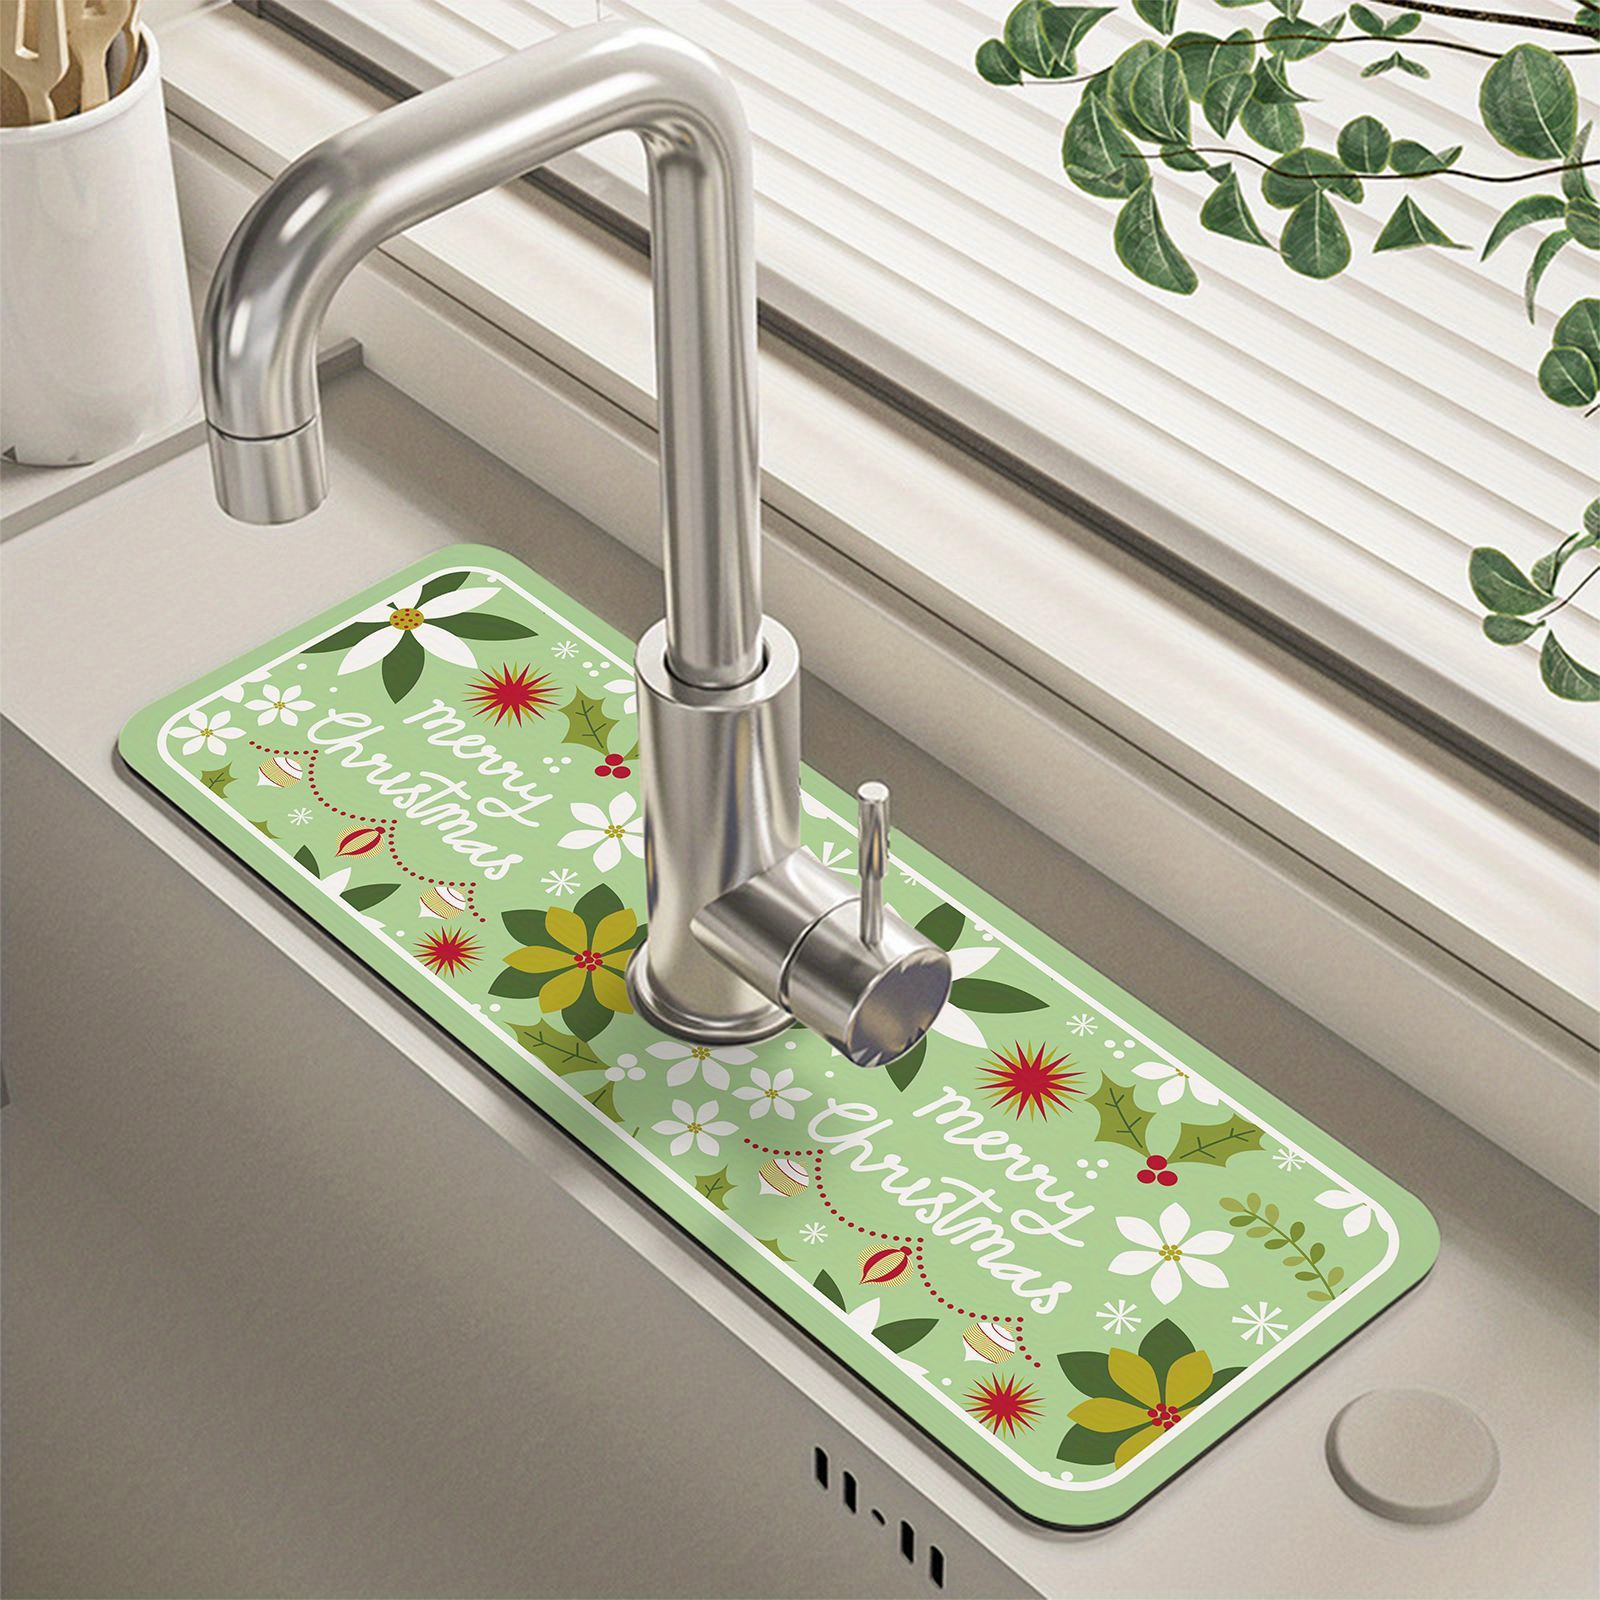 3pcs/set Diatom Mud Water Trough Mat For Bathroom Sink Counter Top